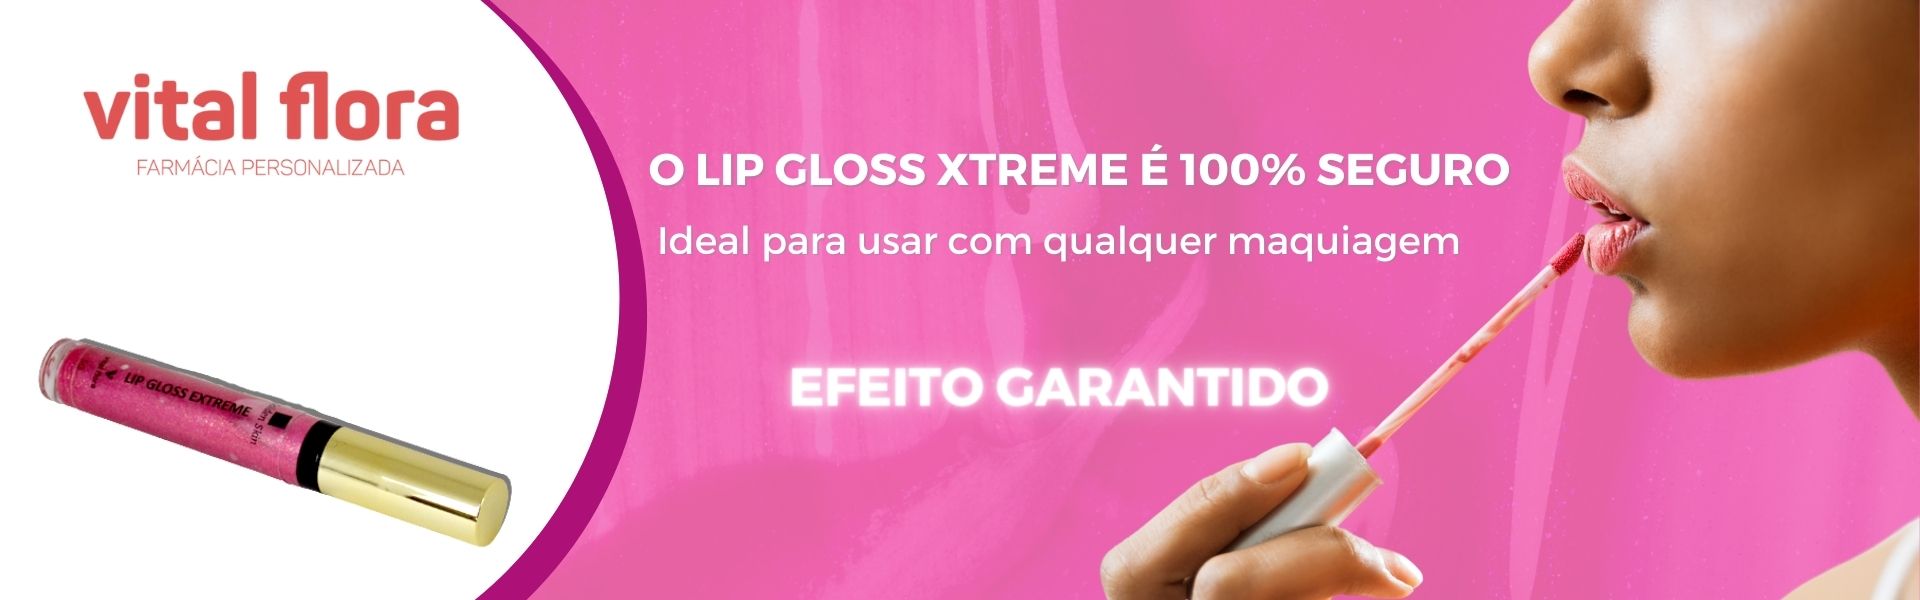 lip-gloss-xtreme-vital-flora-banner-seguro